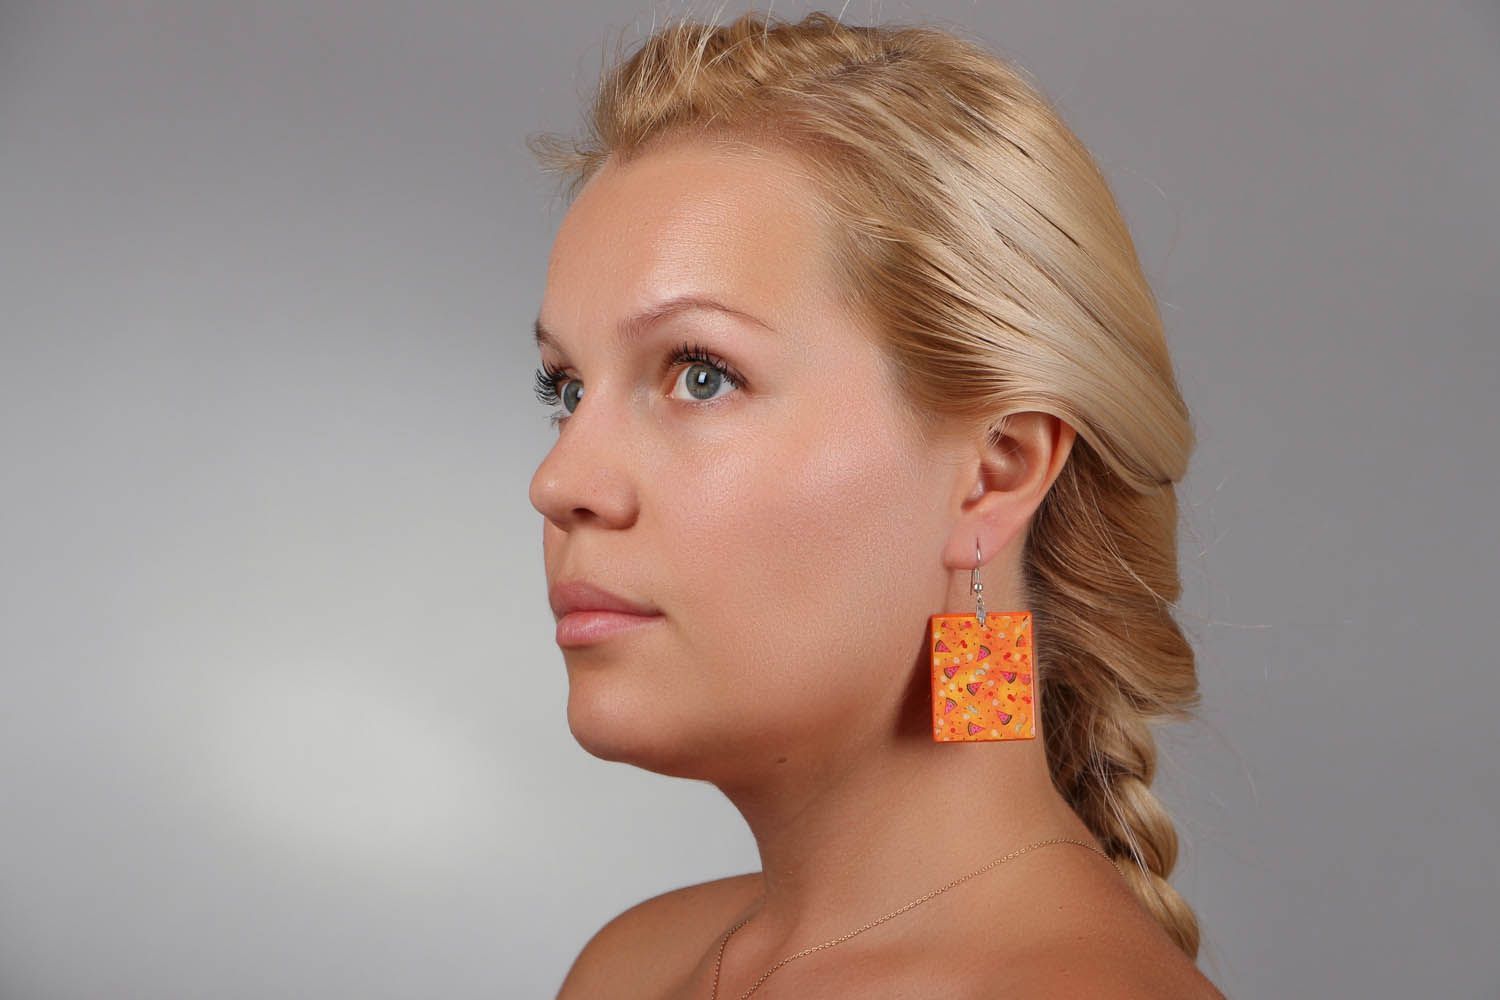 Rectangular earrings made of plastic materials photo 4